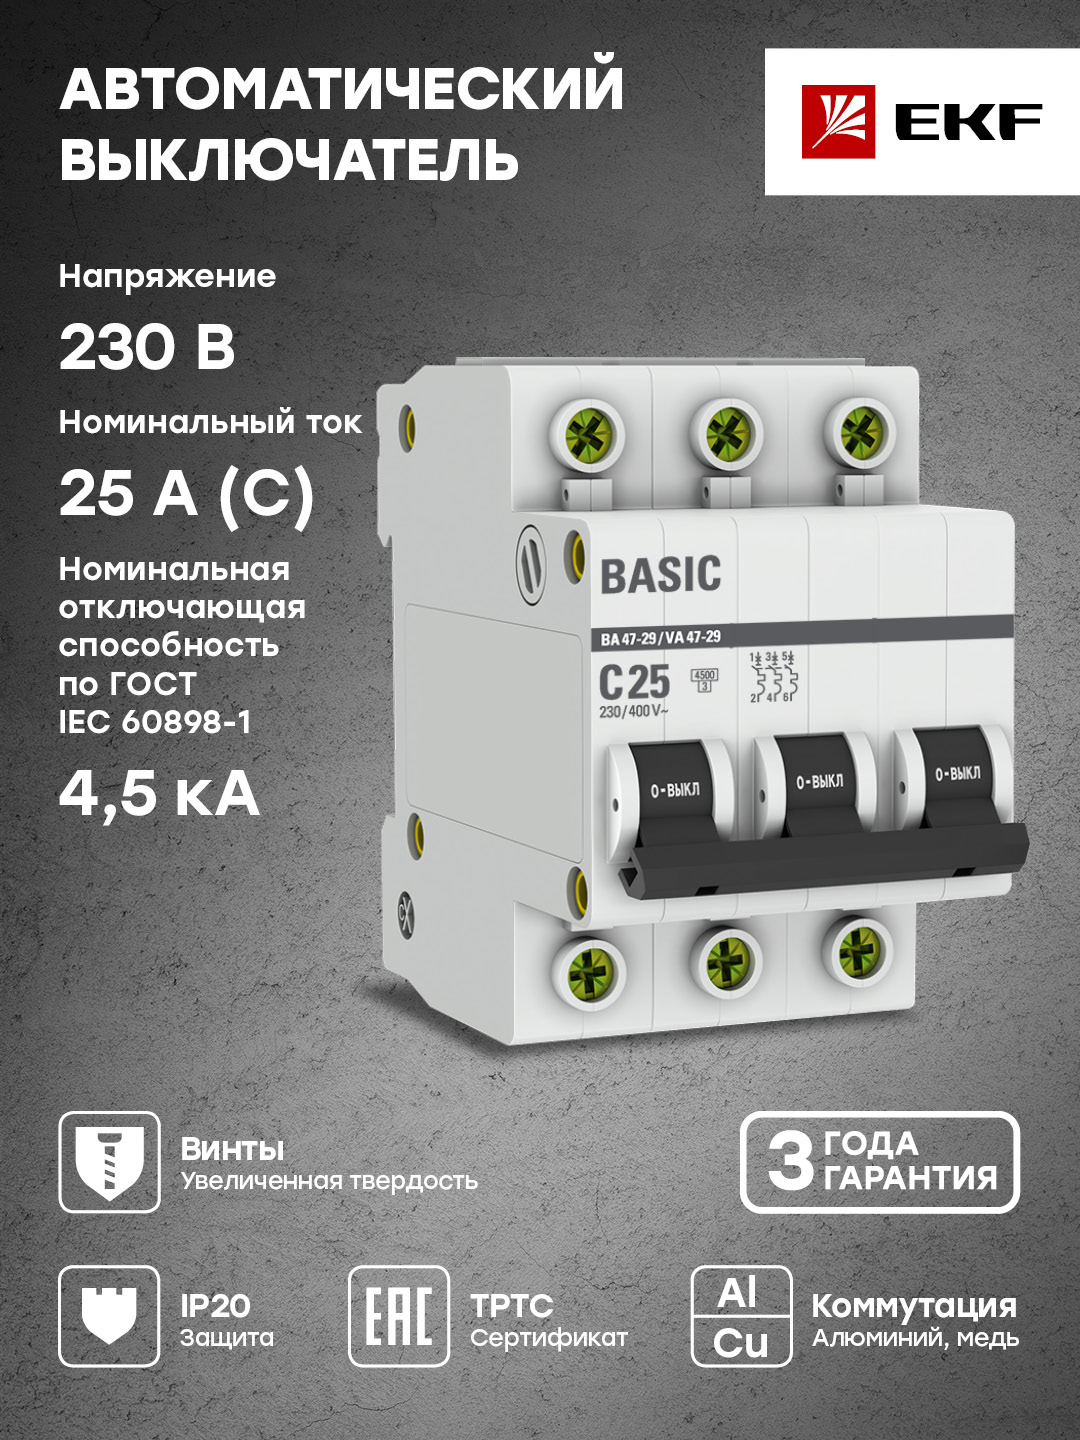 Автоматический выключатель EKF Basic 3P 25А (C) 4,5кА ВА 47-29 mcb4729-3-25C